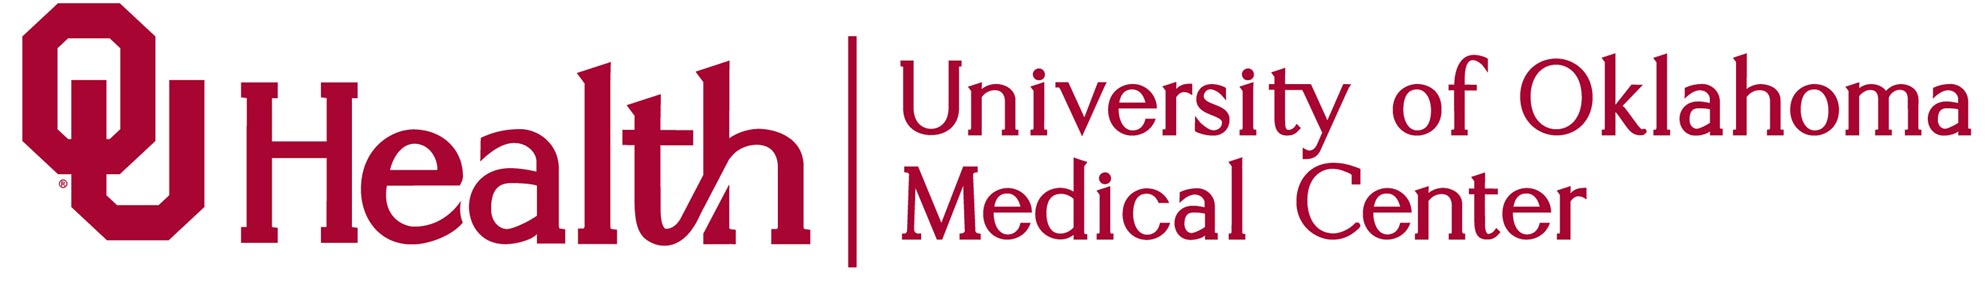 Logo for OU Health - University of Oklahoma Medical Center